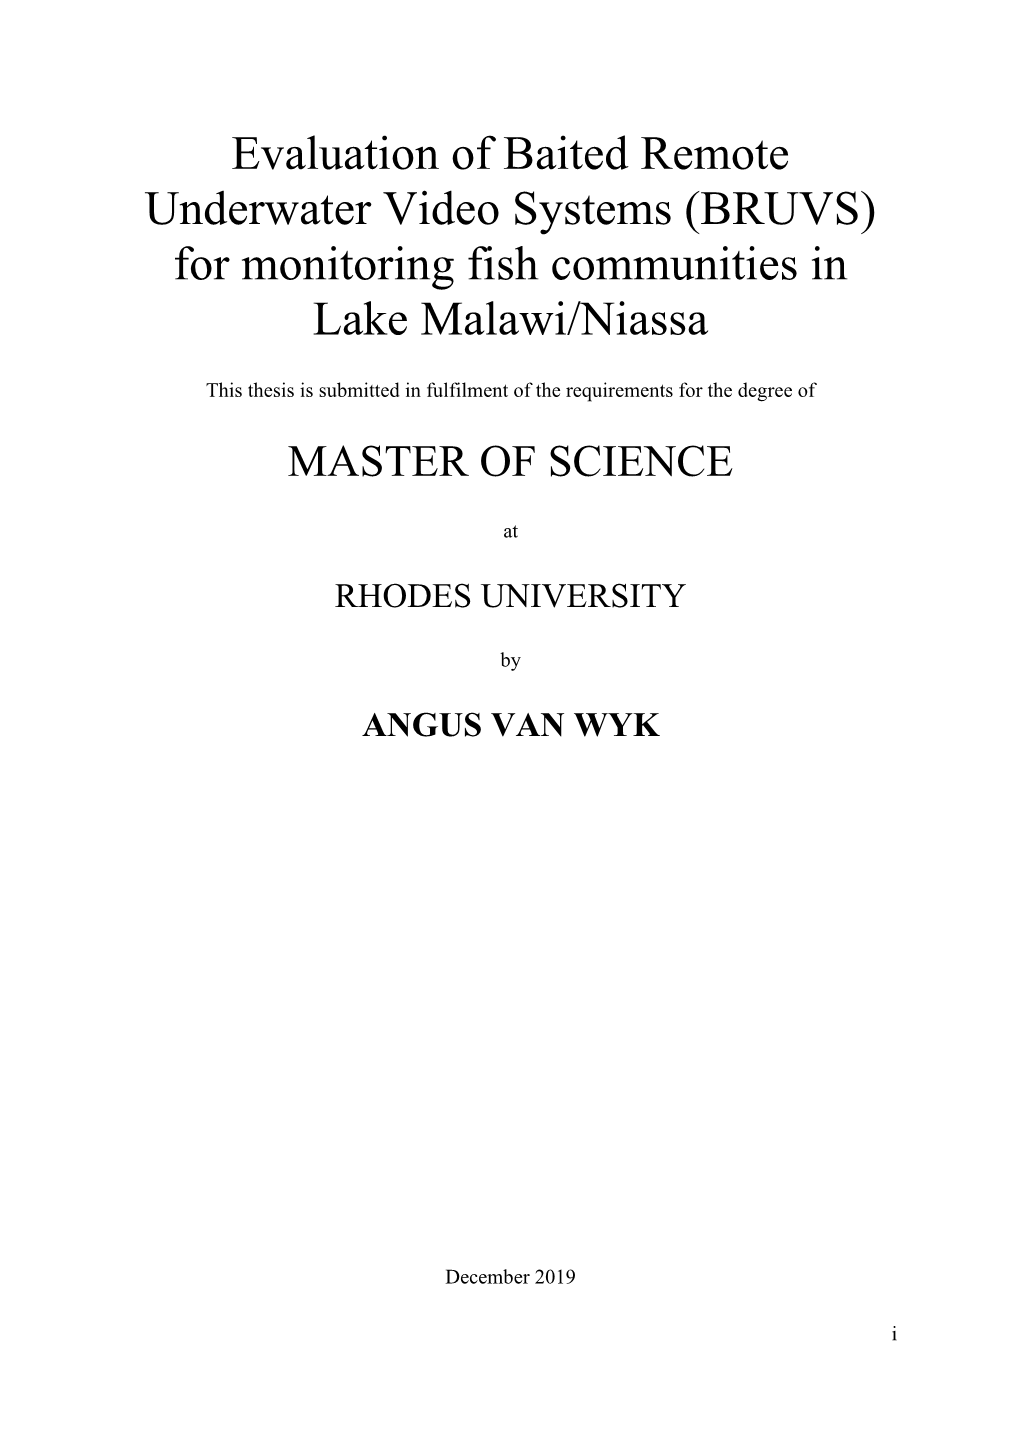 (BRUVS) for Monitoring Fish Communities in Lake Malawi/Niassa